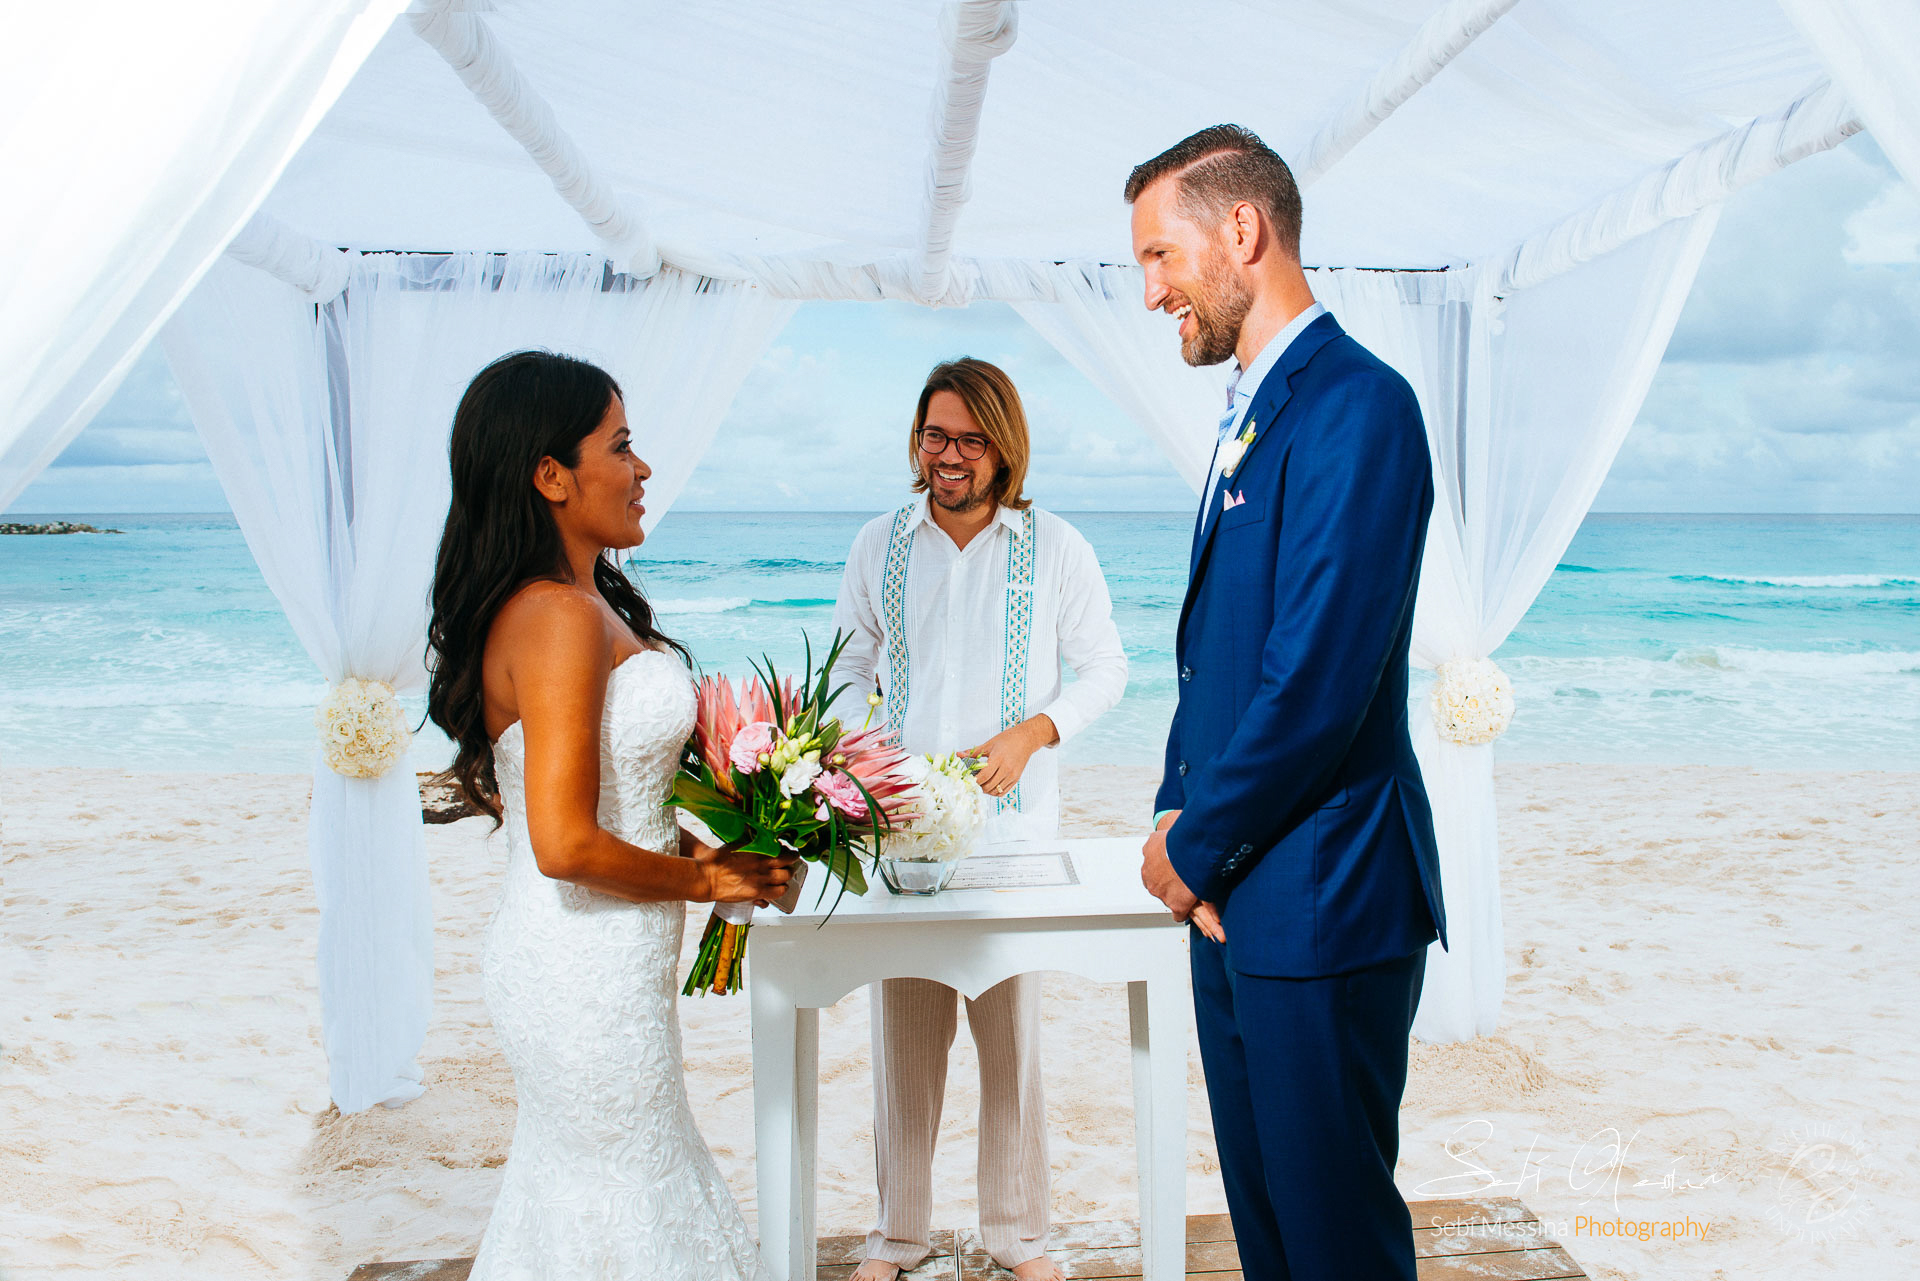 Wedding Mandala Beach - Sebi Messina Photography